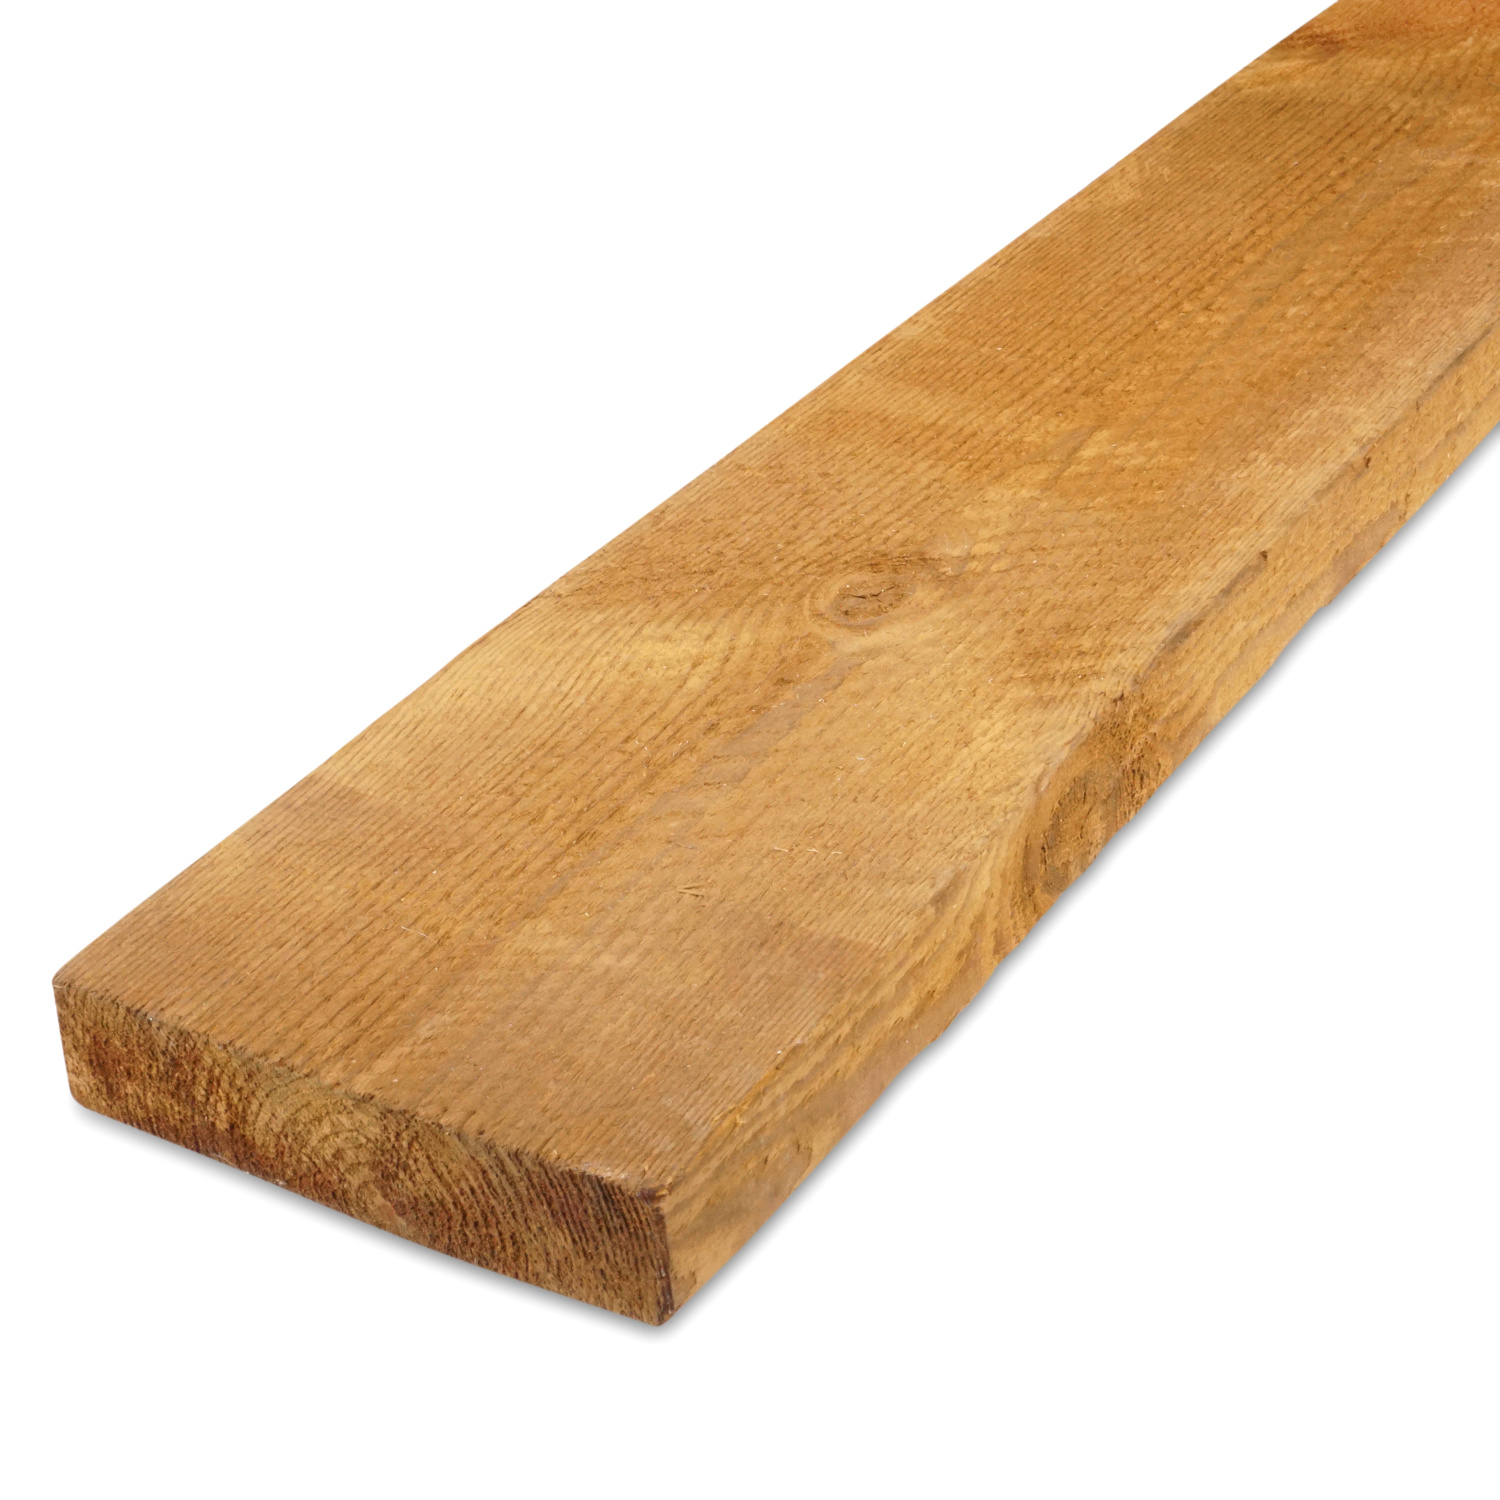 peper Schaduw Gevangene Thermowood grenen plank 32x150mm - ruw thermo grenen kd (8-12%) | HOUTvakman